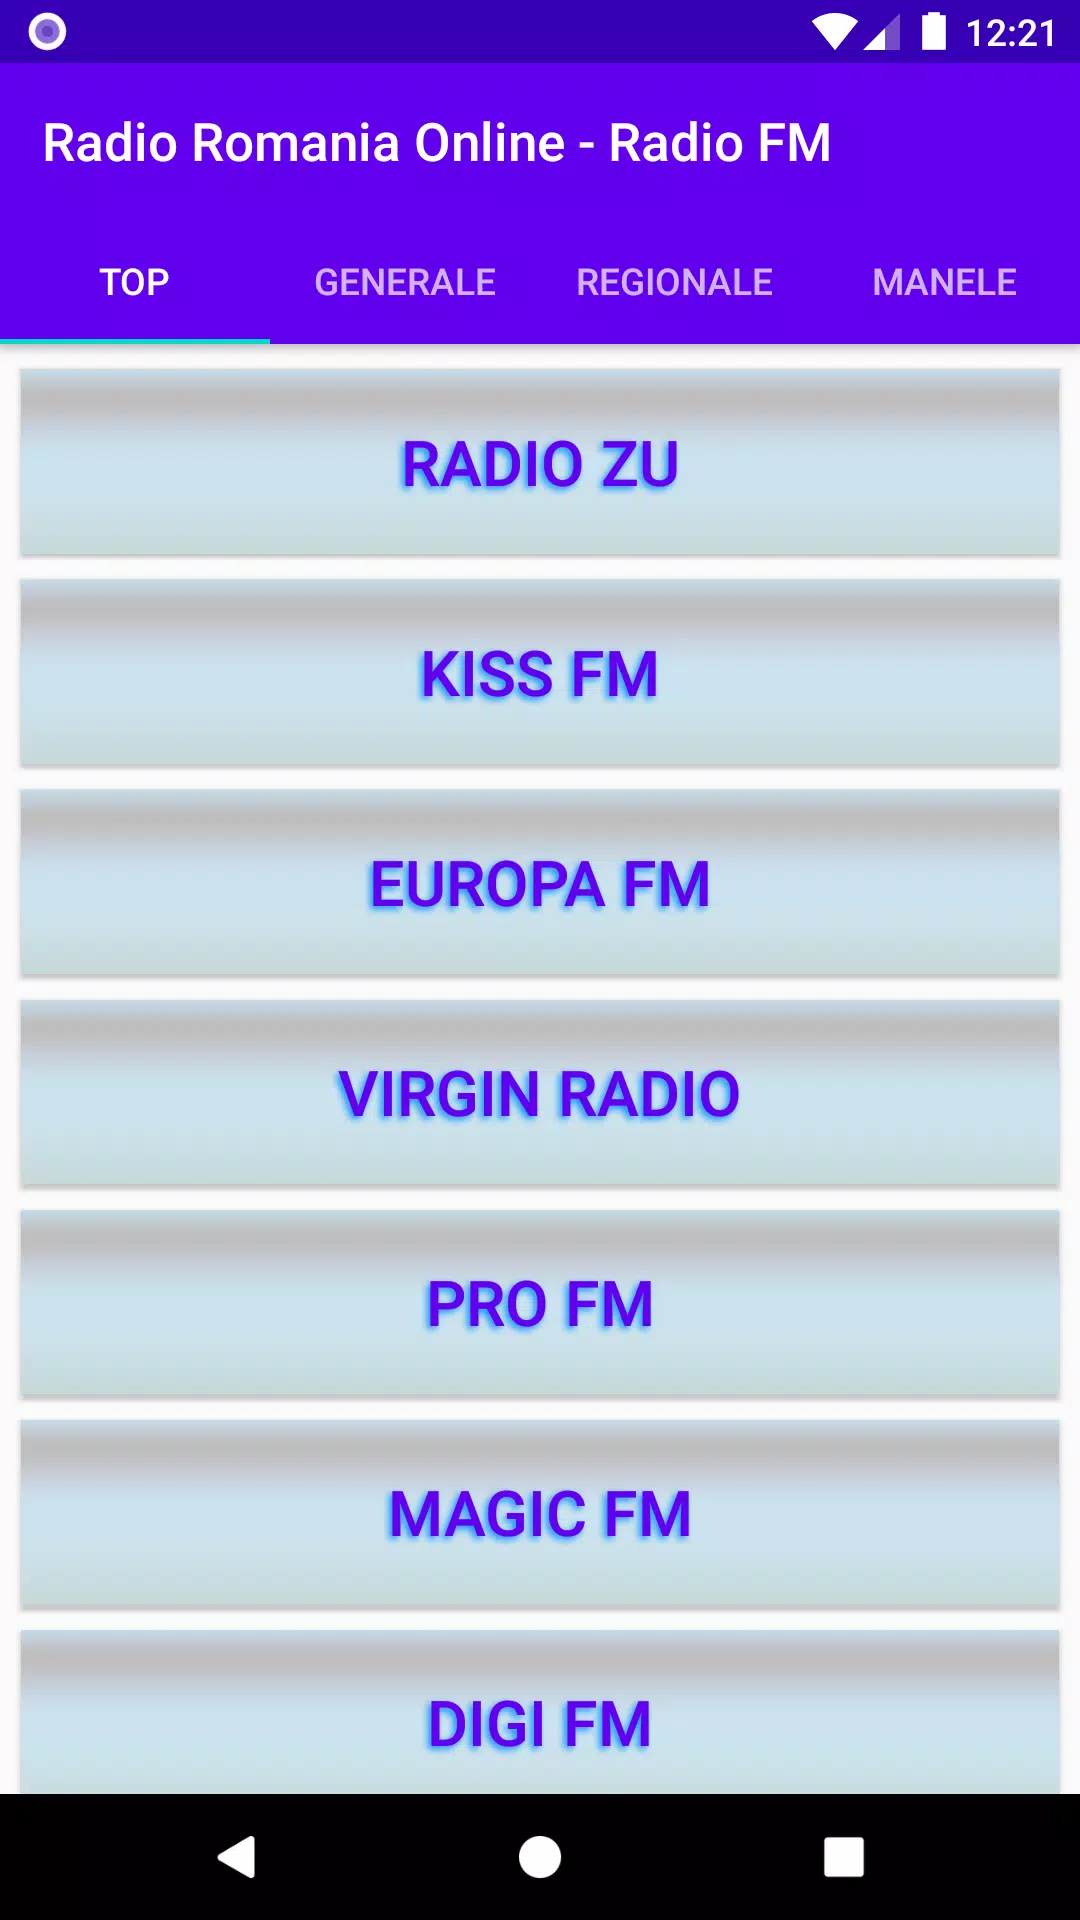 Radio Romania Online - Radio FM APK for Android Download